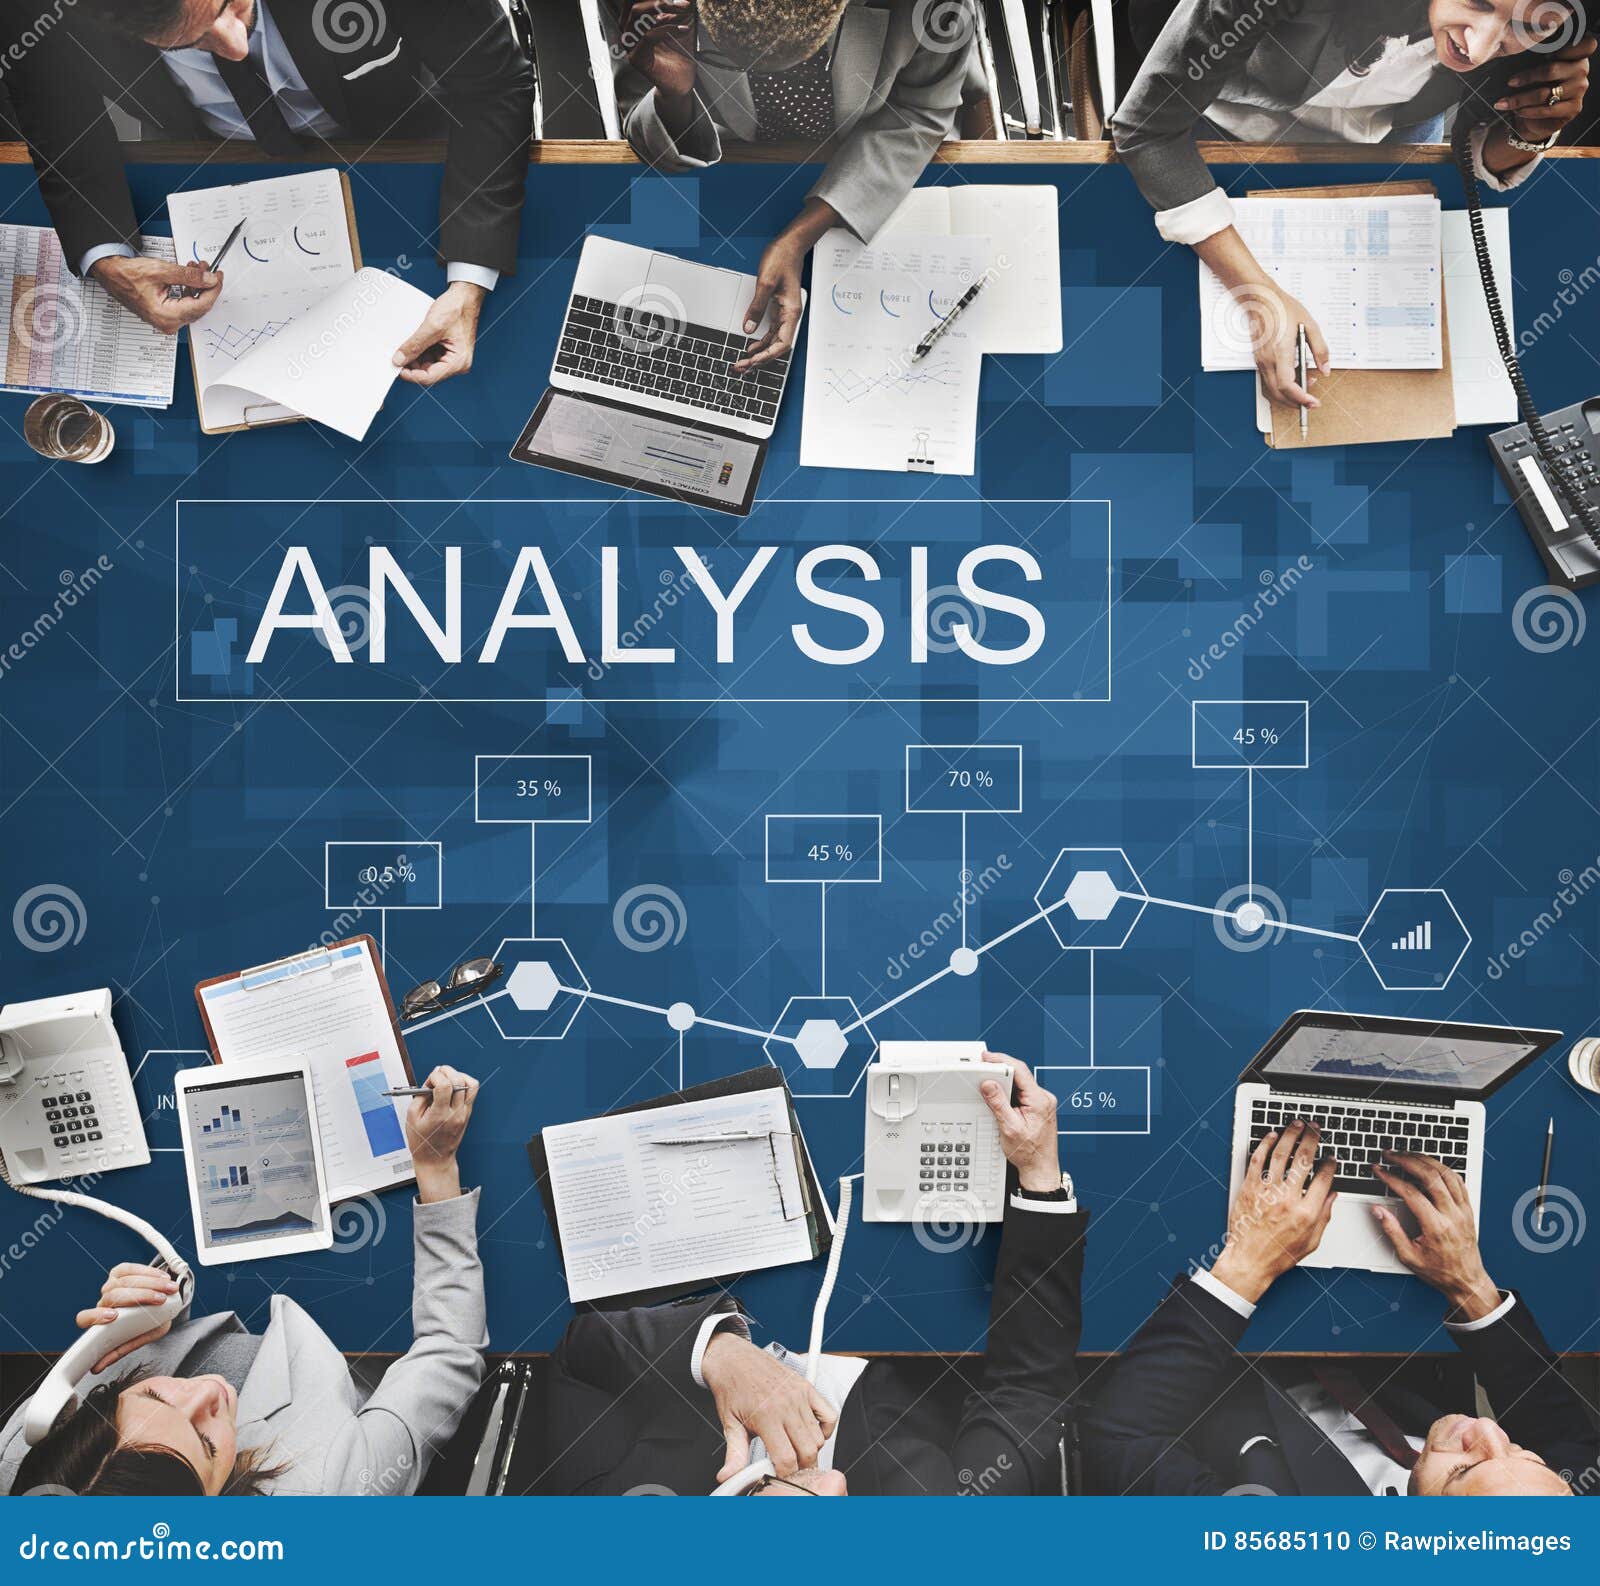 analytics business statistics strategy progress concept